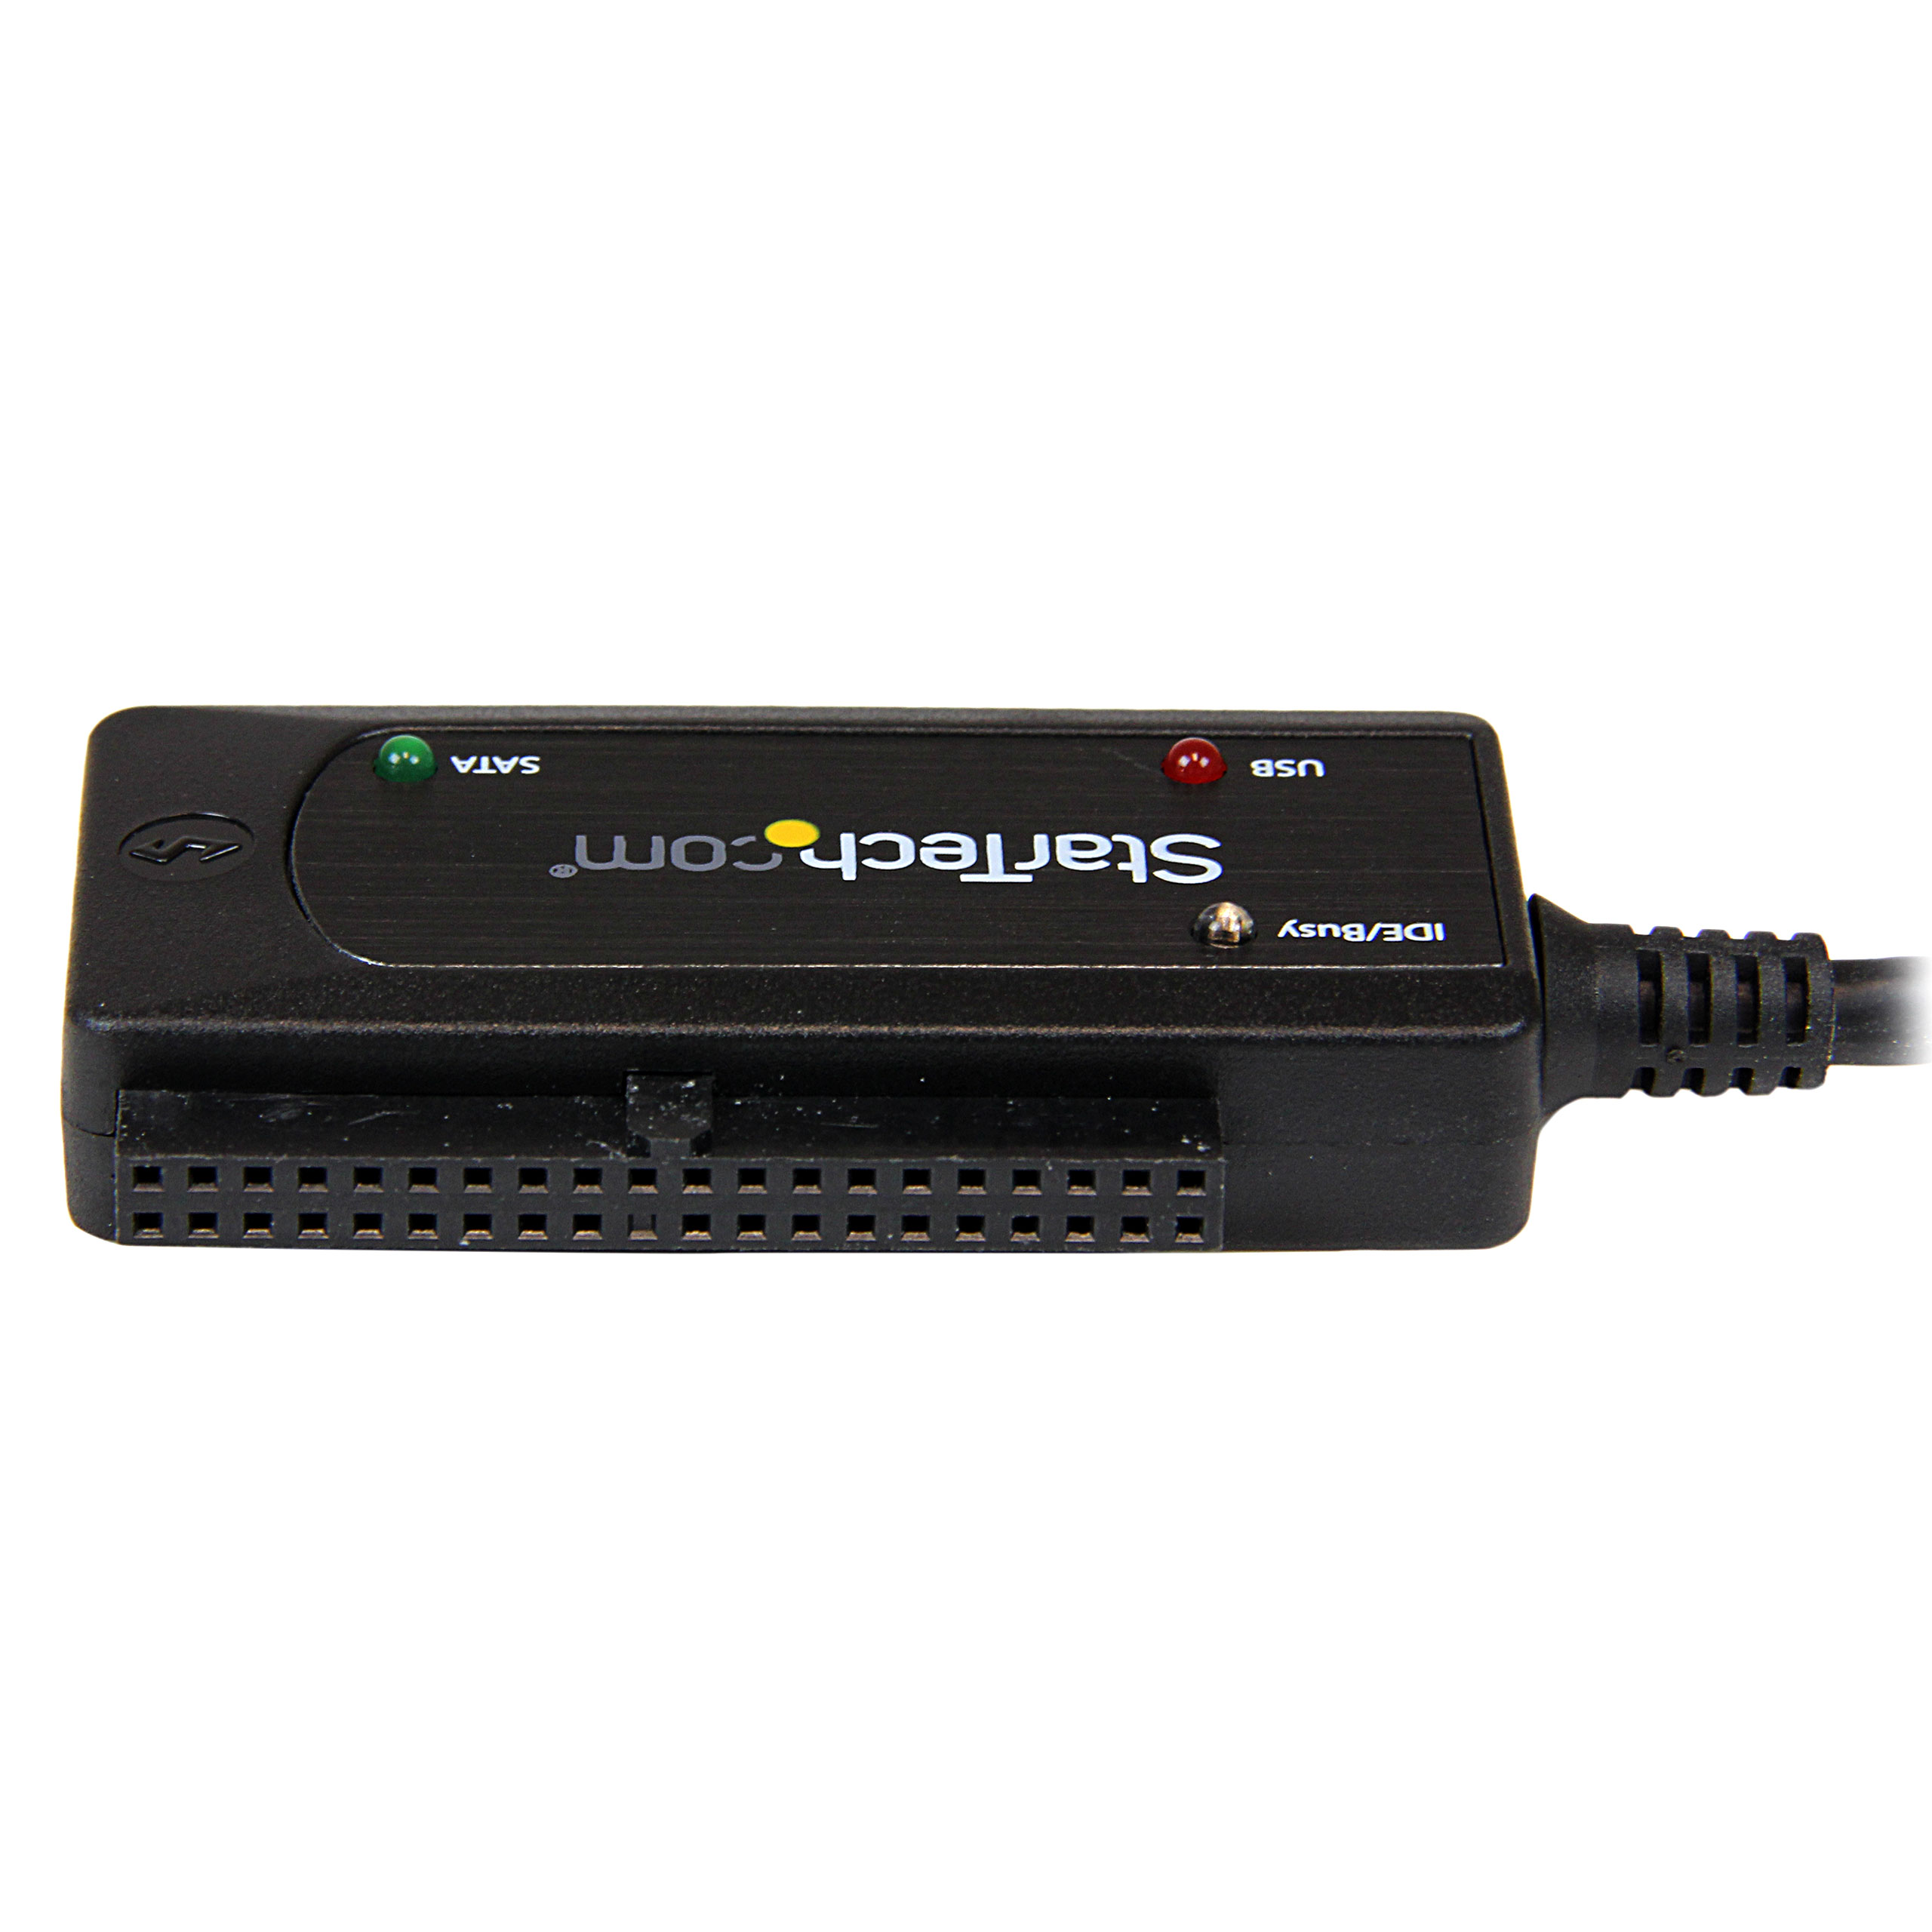 Adaptateur SATA USB 3.0 - CPC informatique